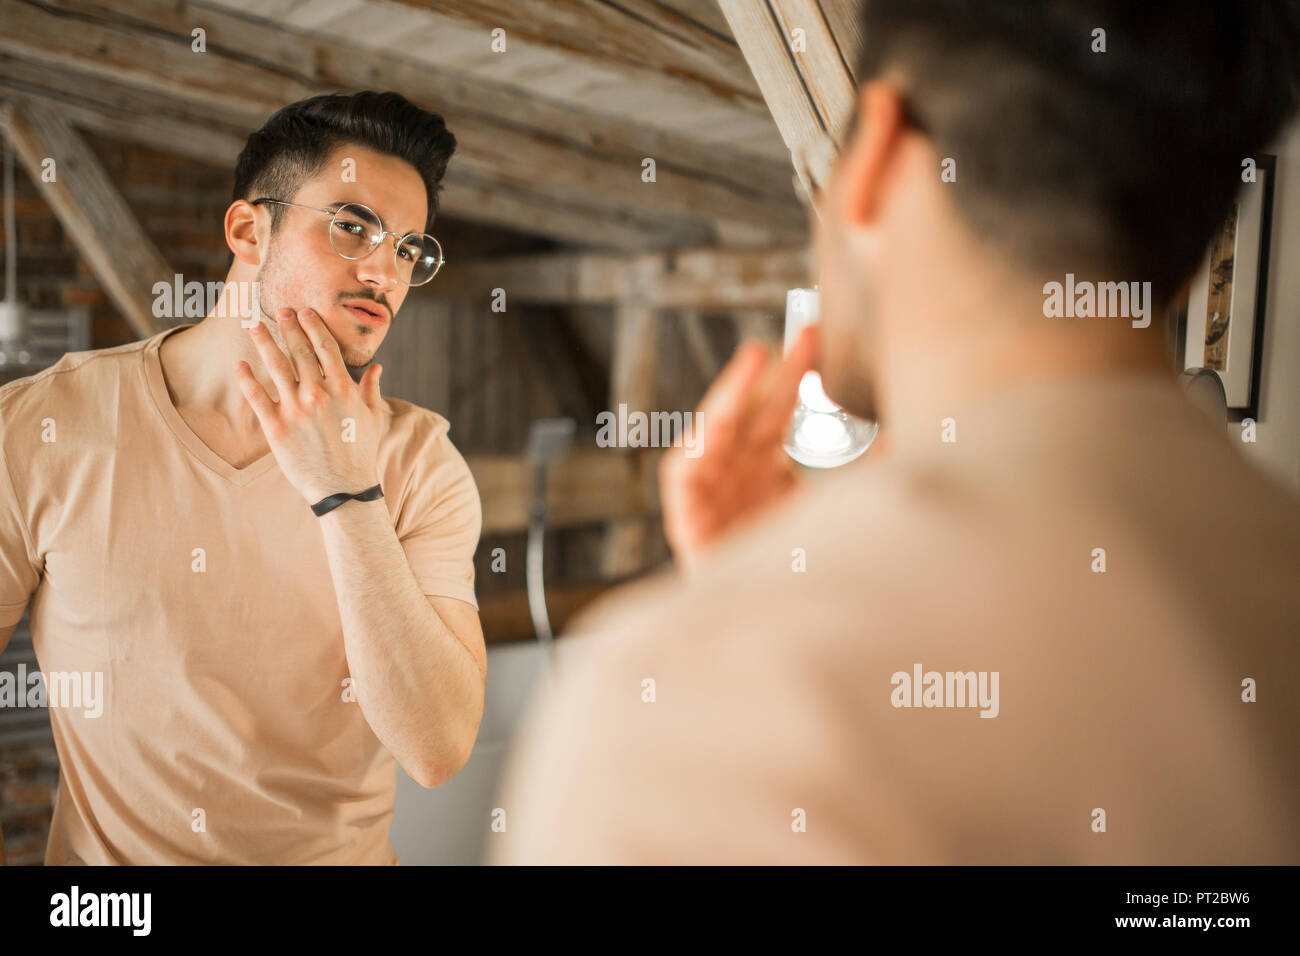 Young man looking in bathroom mirror Stock Photo